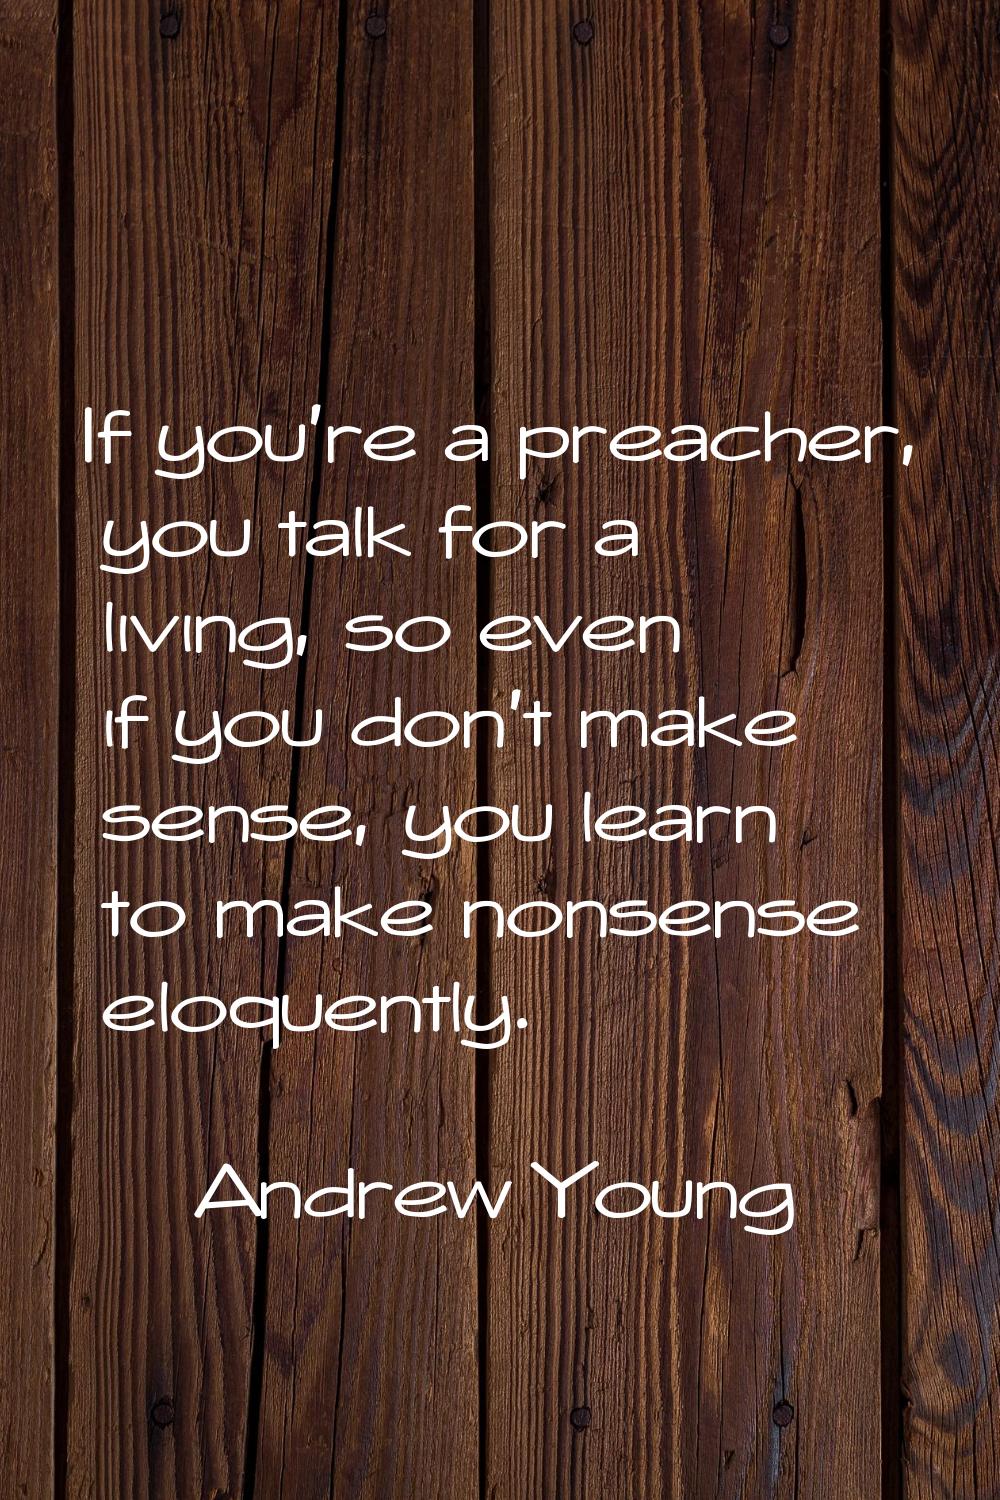 If you're a preacher, you talk for a living, so even if you don't make sense, you learn to make non